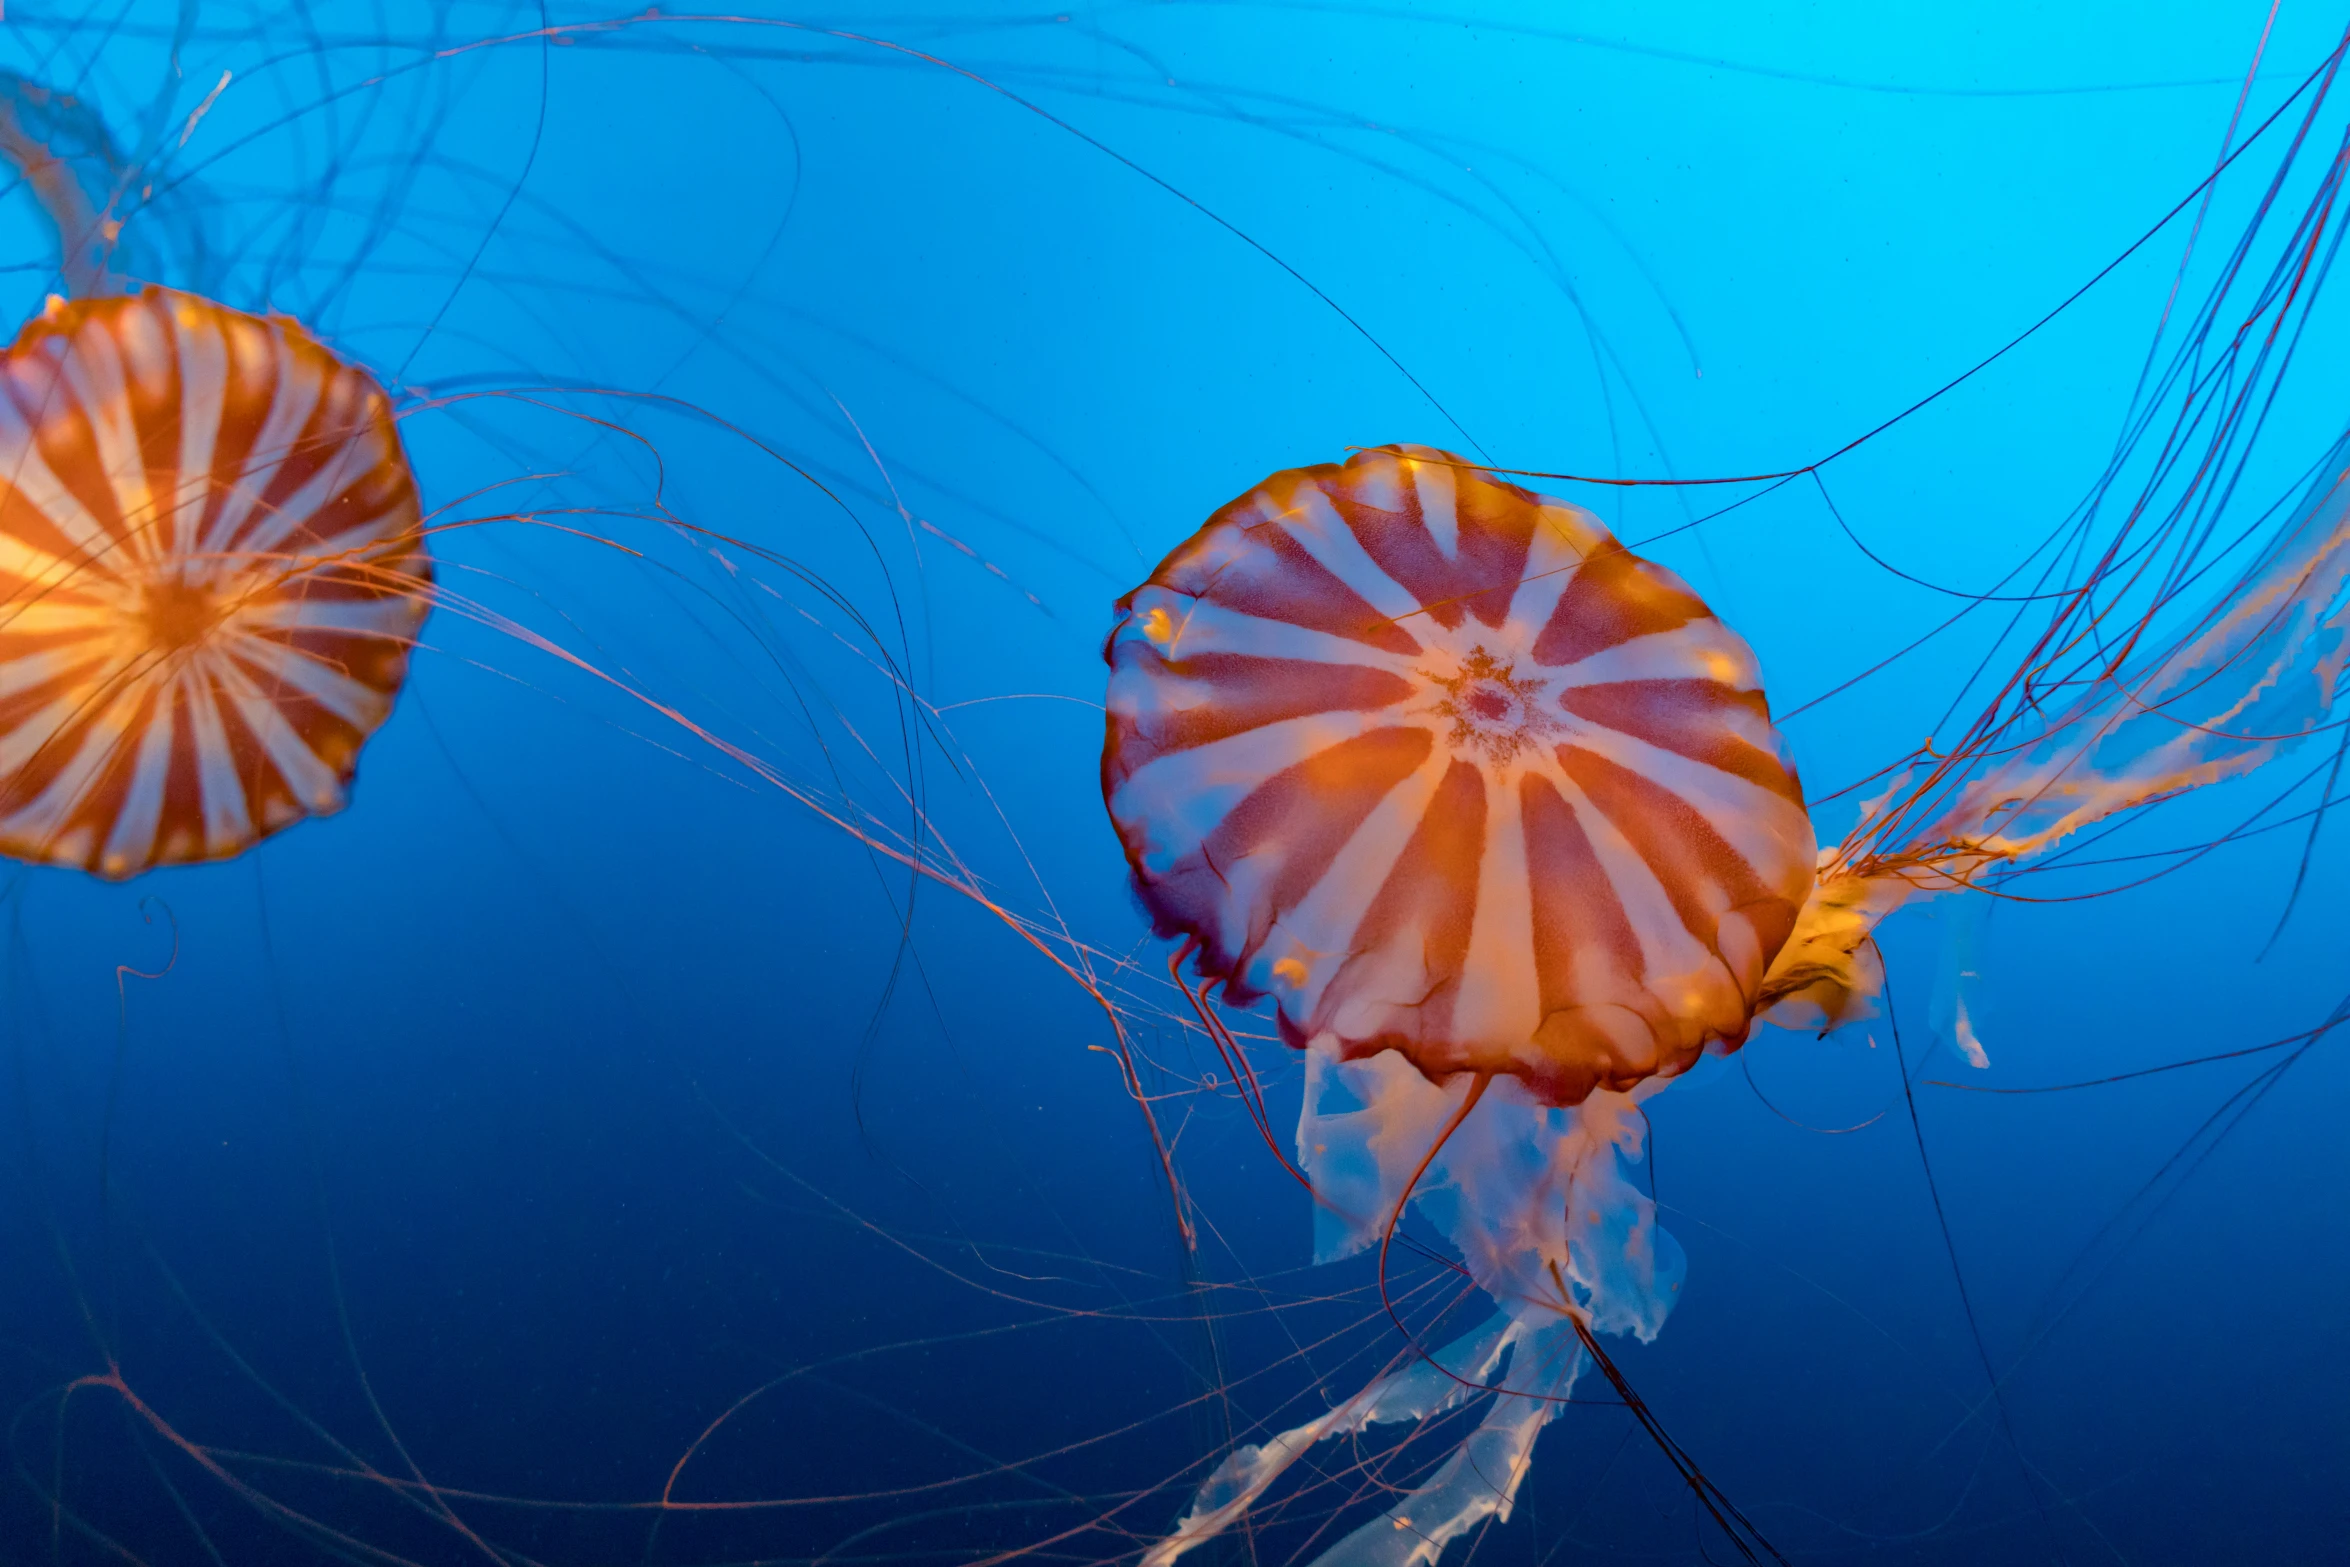 two jelly fish swimming inside an aquarium